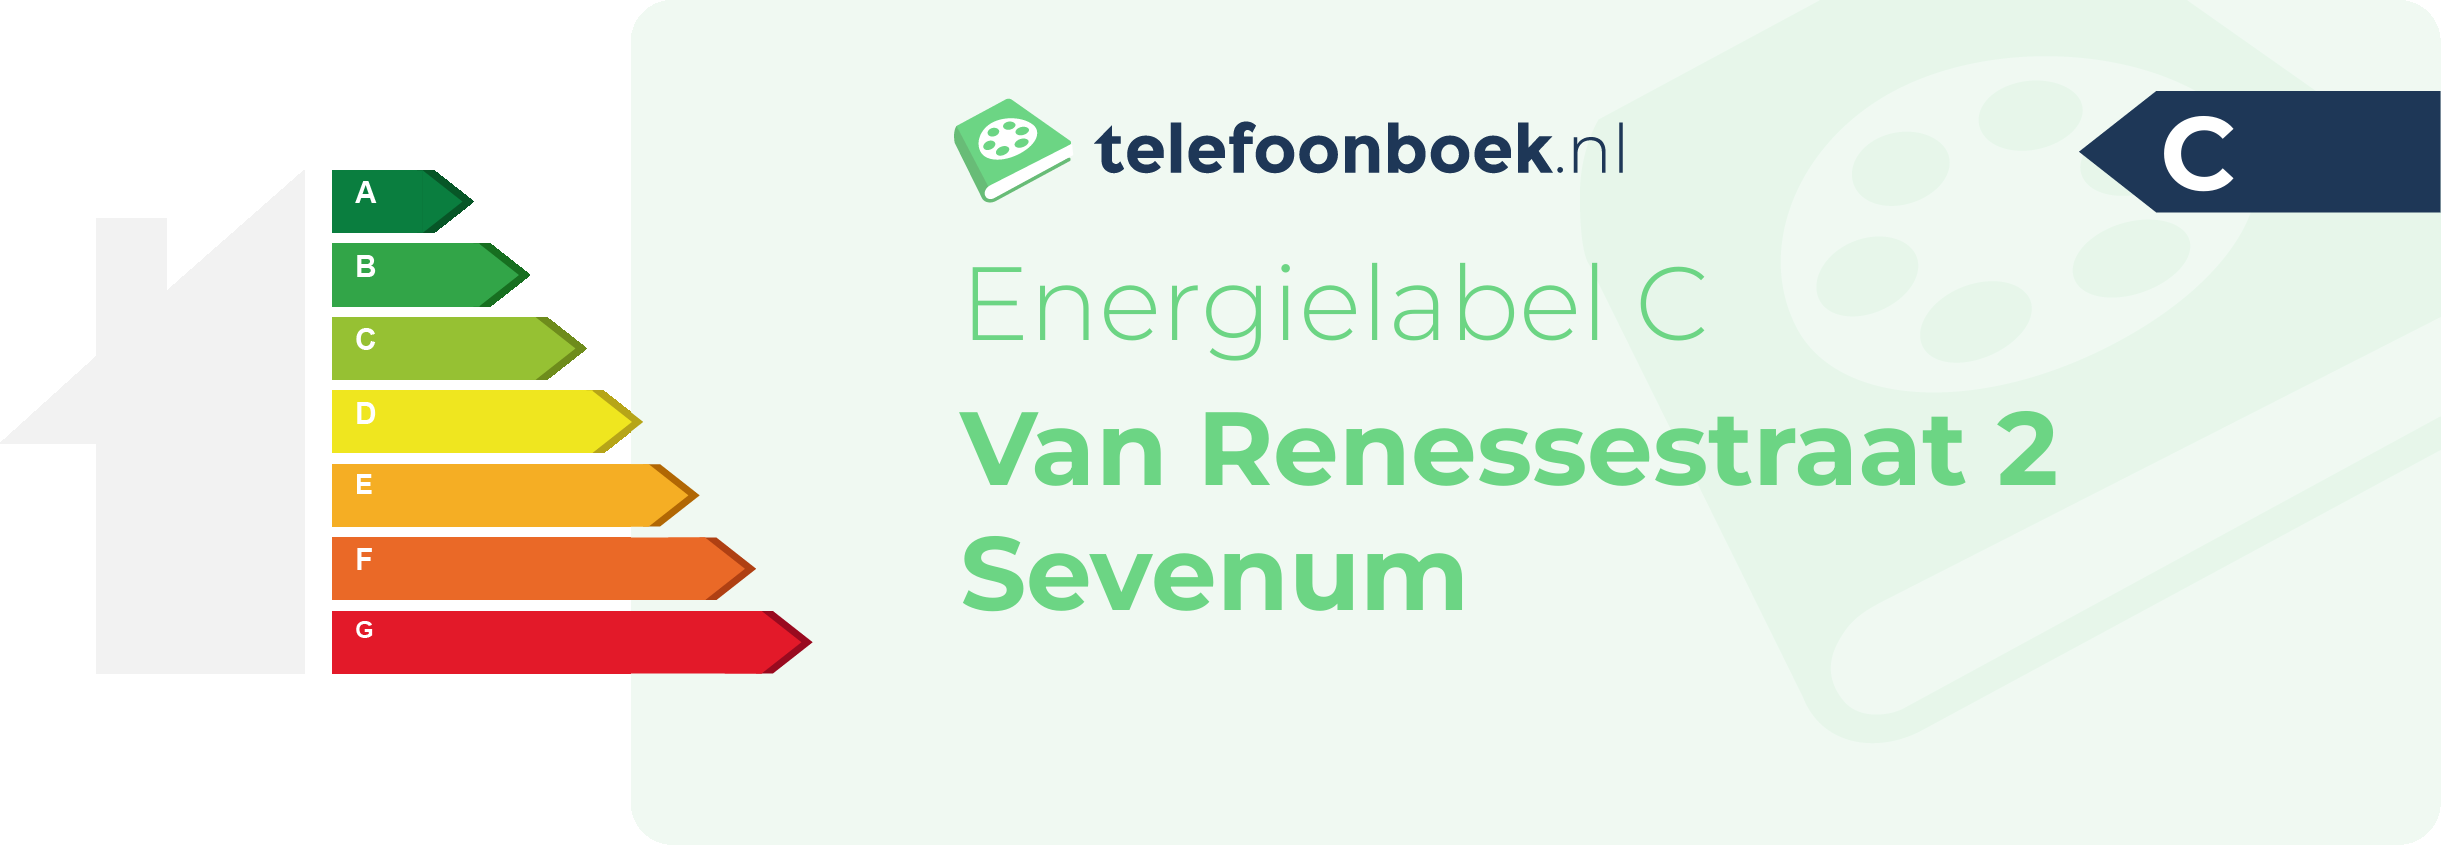 Energielabel Van Renessestraat 2 Sevenum